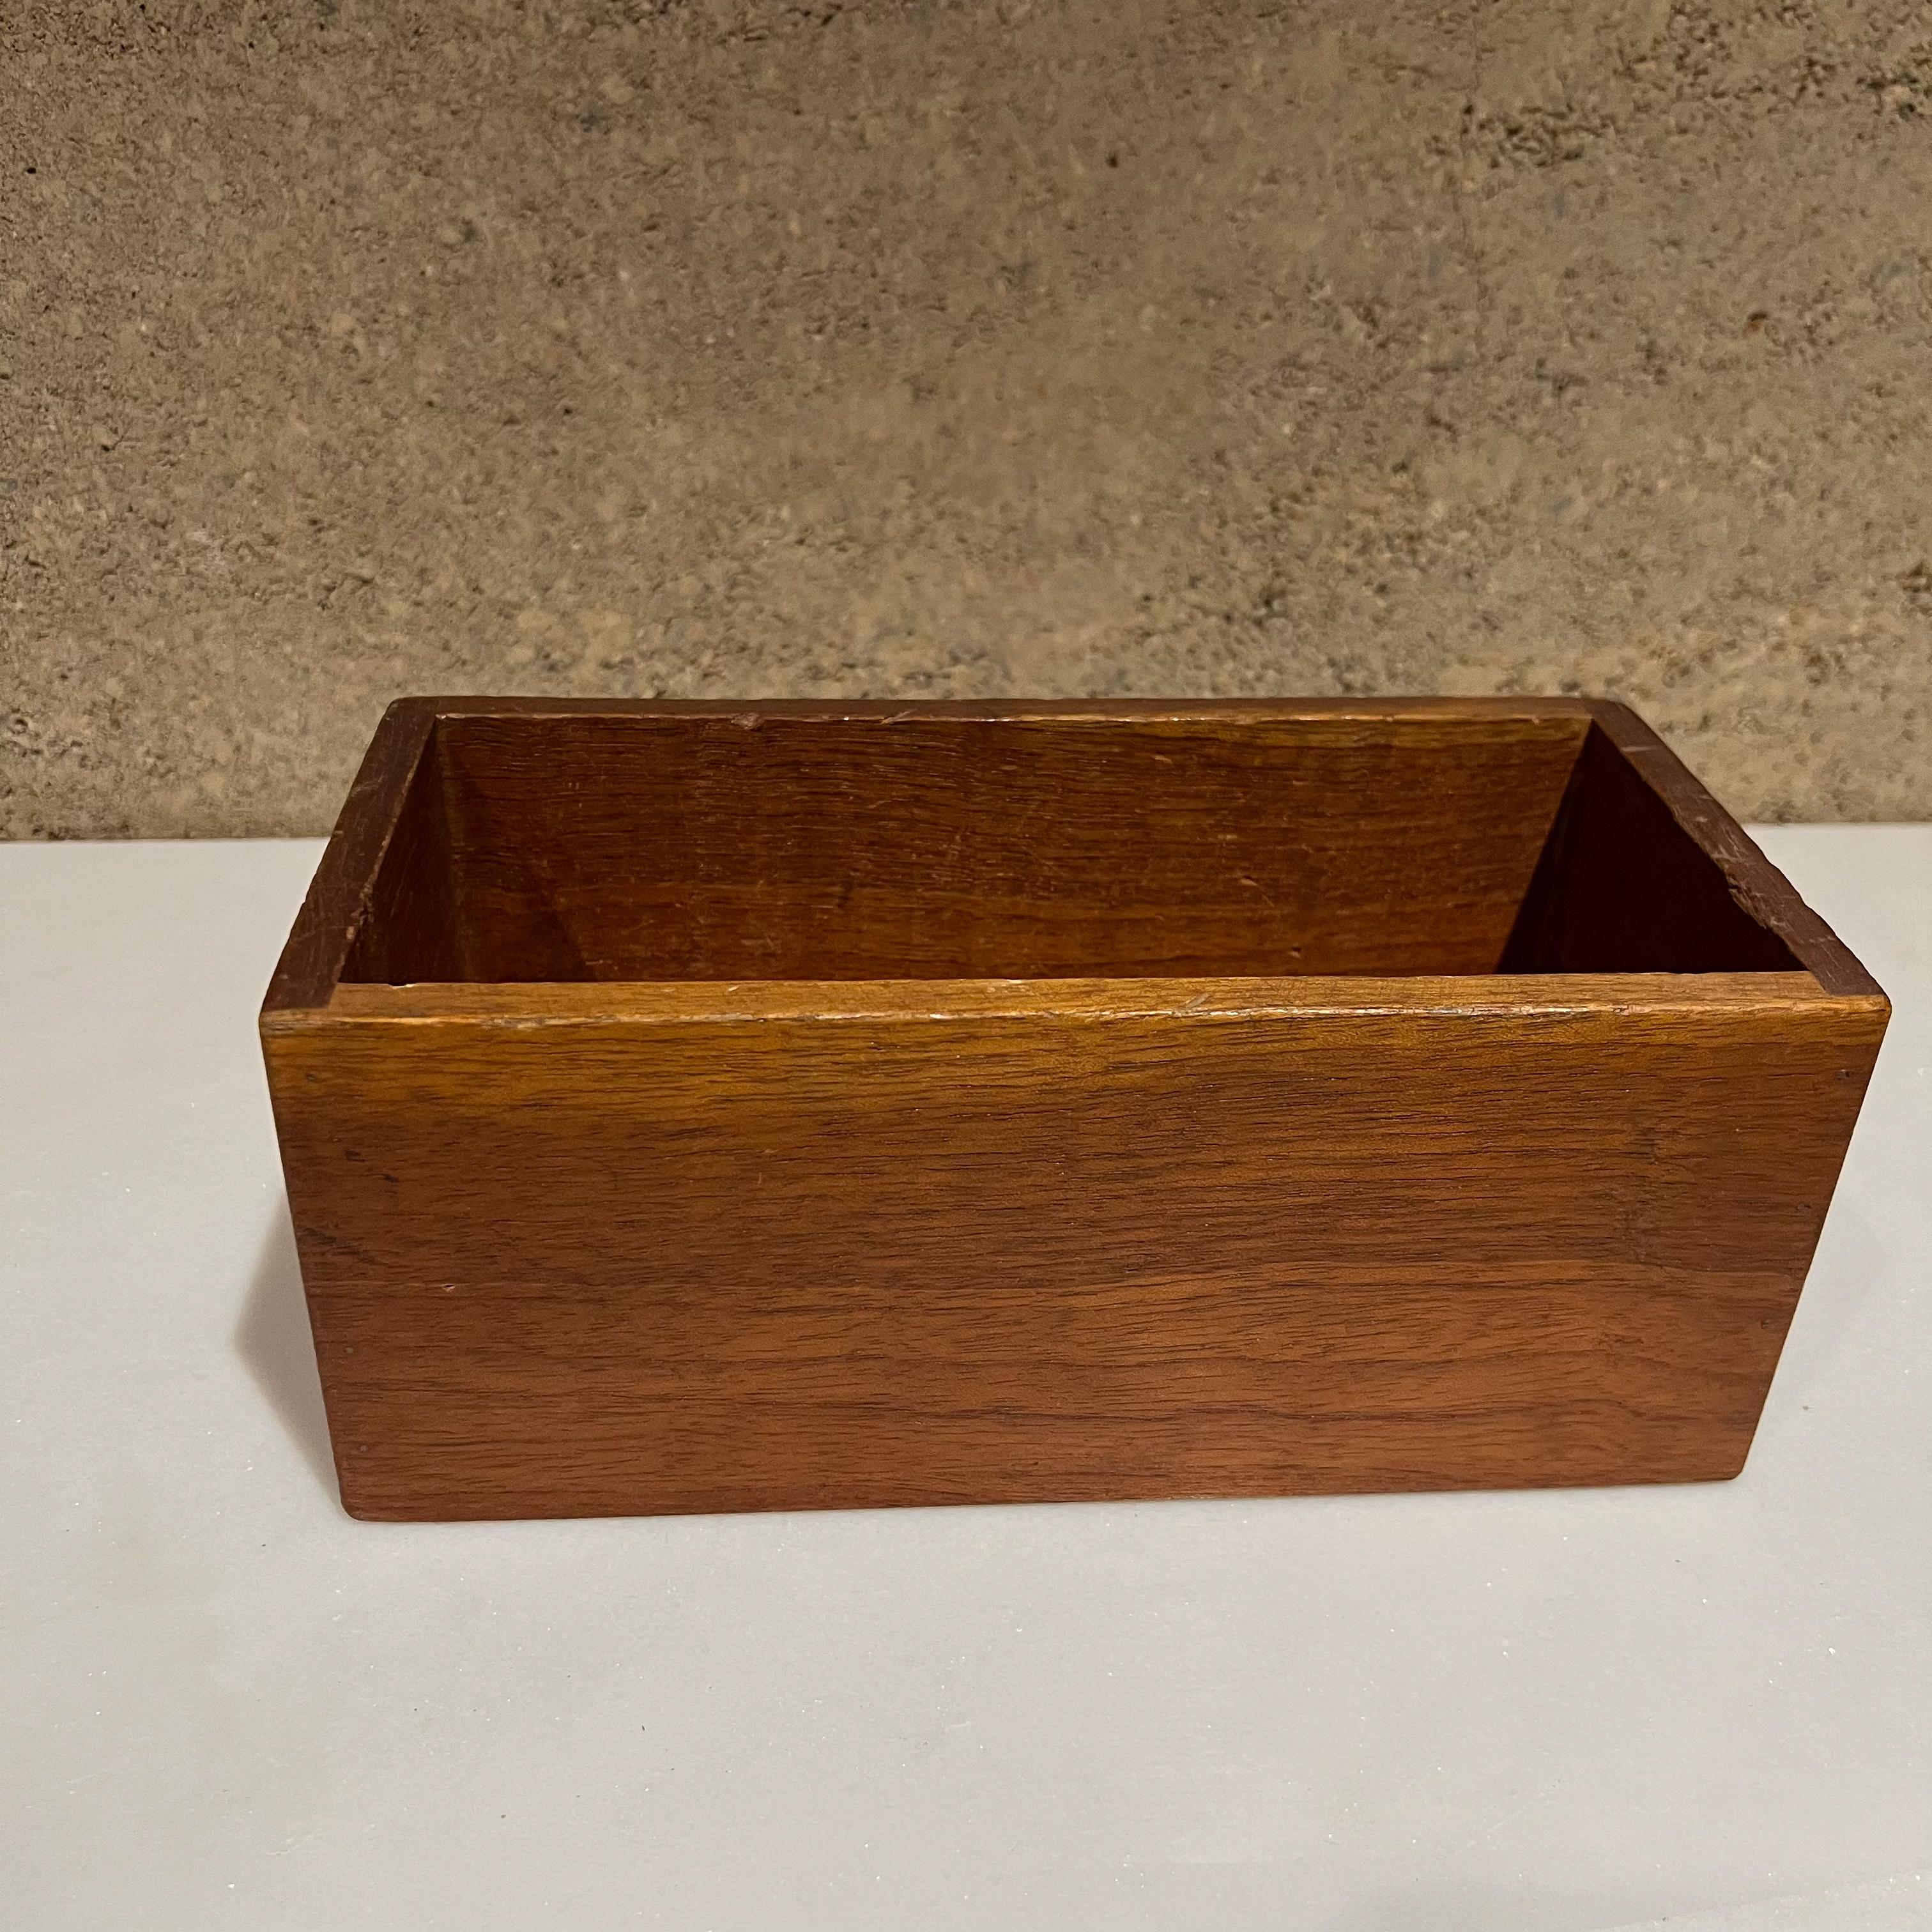 1960s Exotic Wood Simple Storage Box Ideal Cedar Catch All Minimalist Design 1